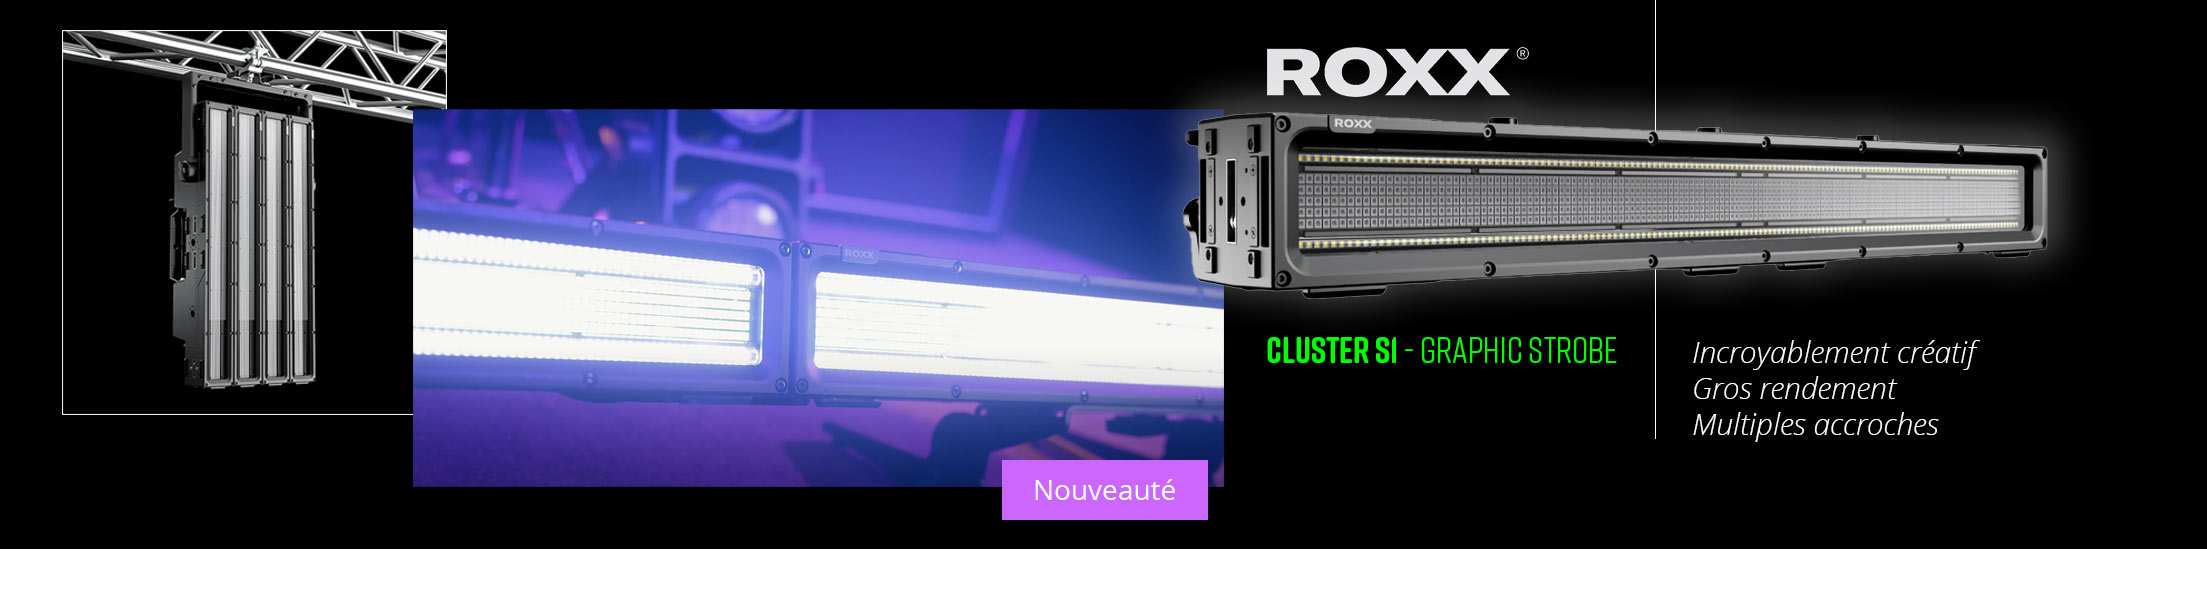 Roxx Cluster S1